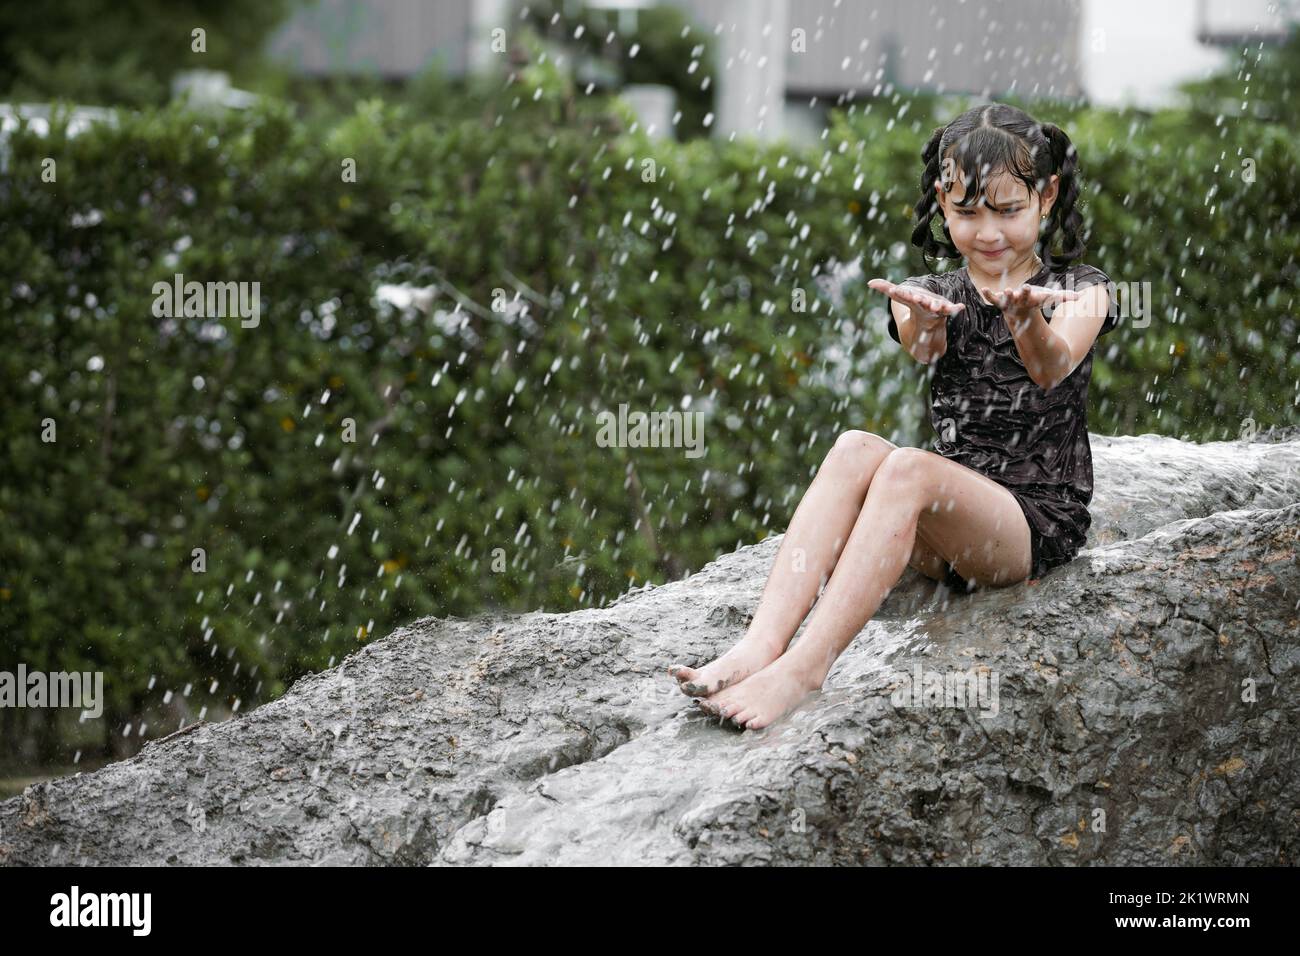 Cheerful child girl playing on heap of wet soil during raining in rainy season. Stock Photo